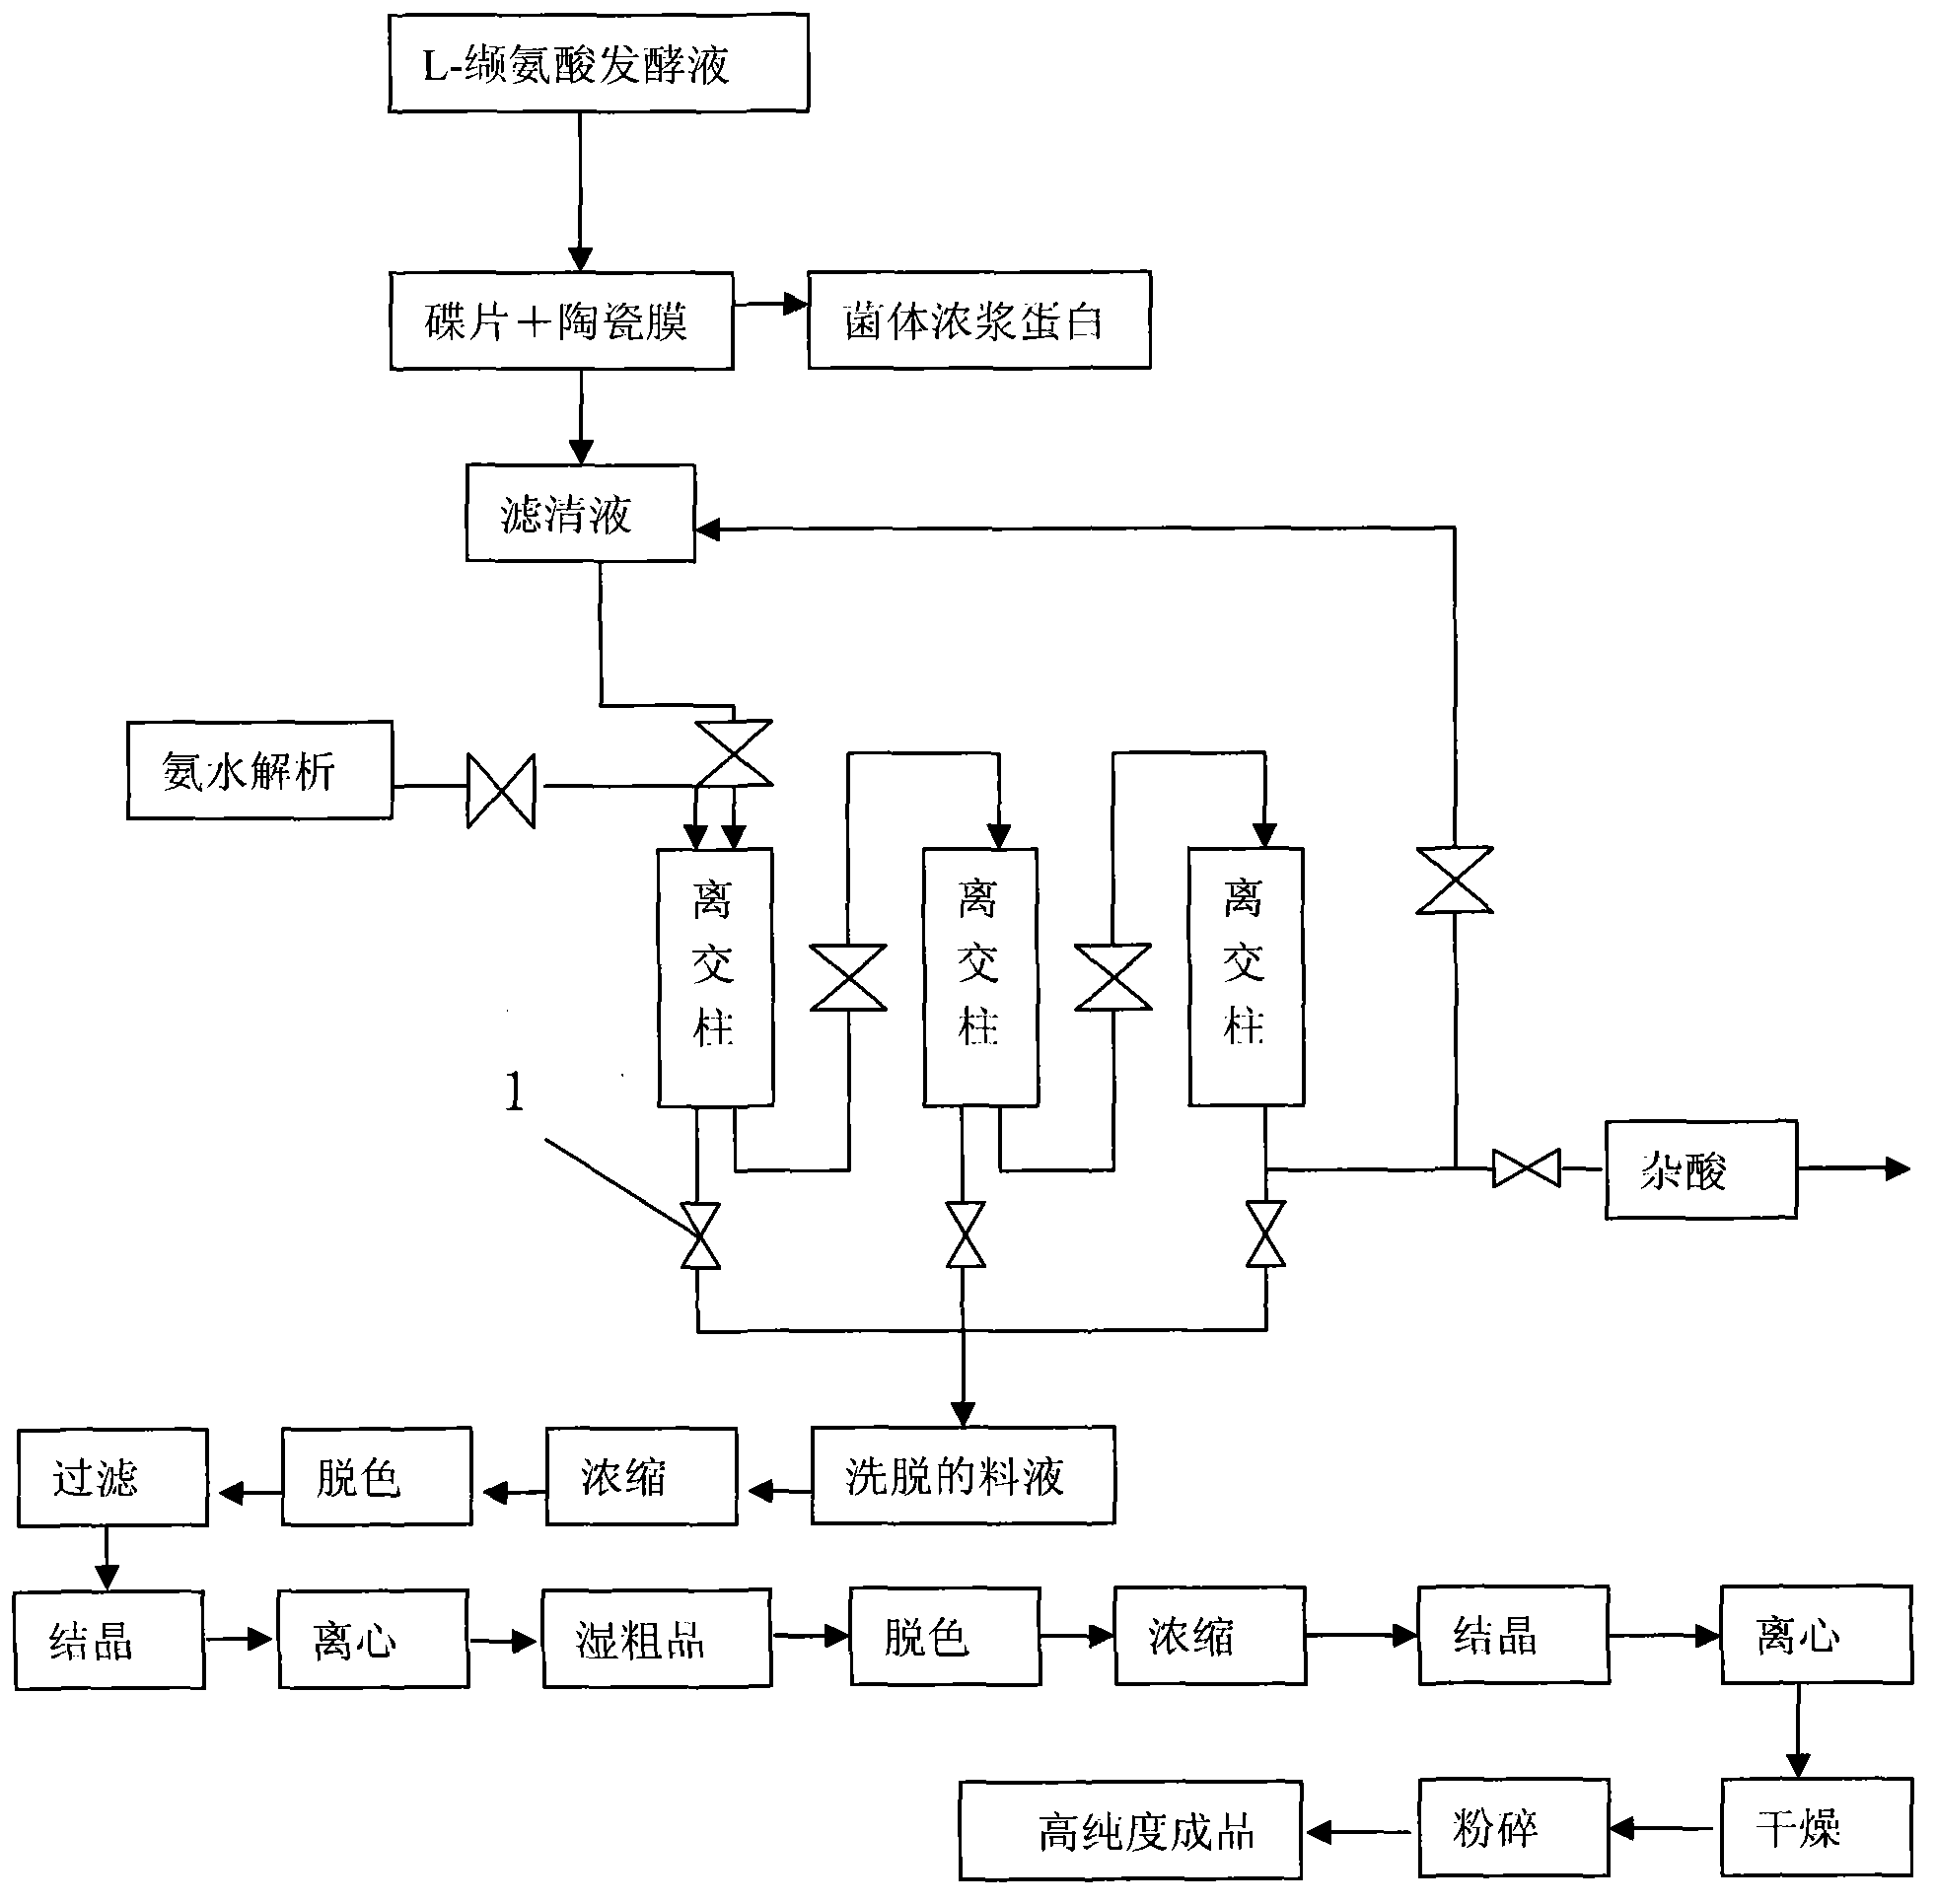 Method for separating heteroacid from valine fermentation liquid